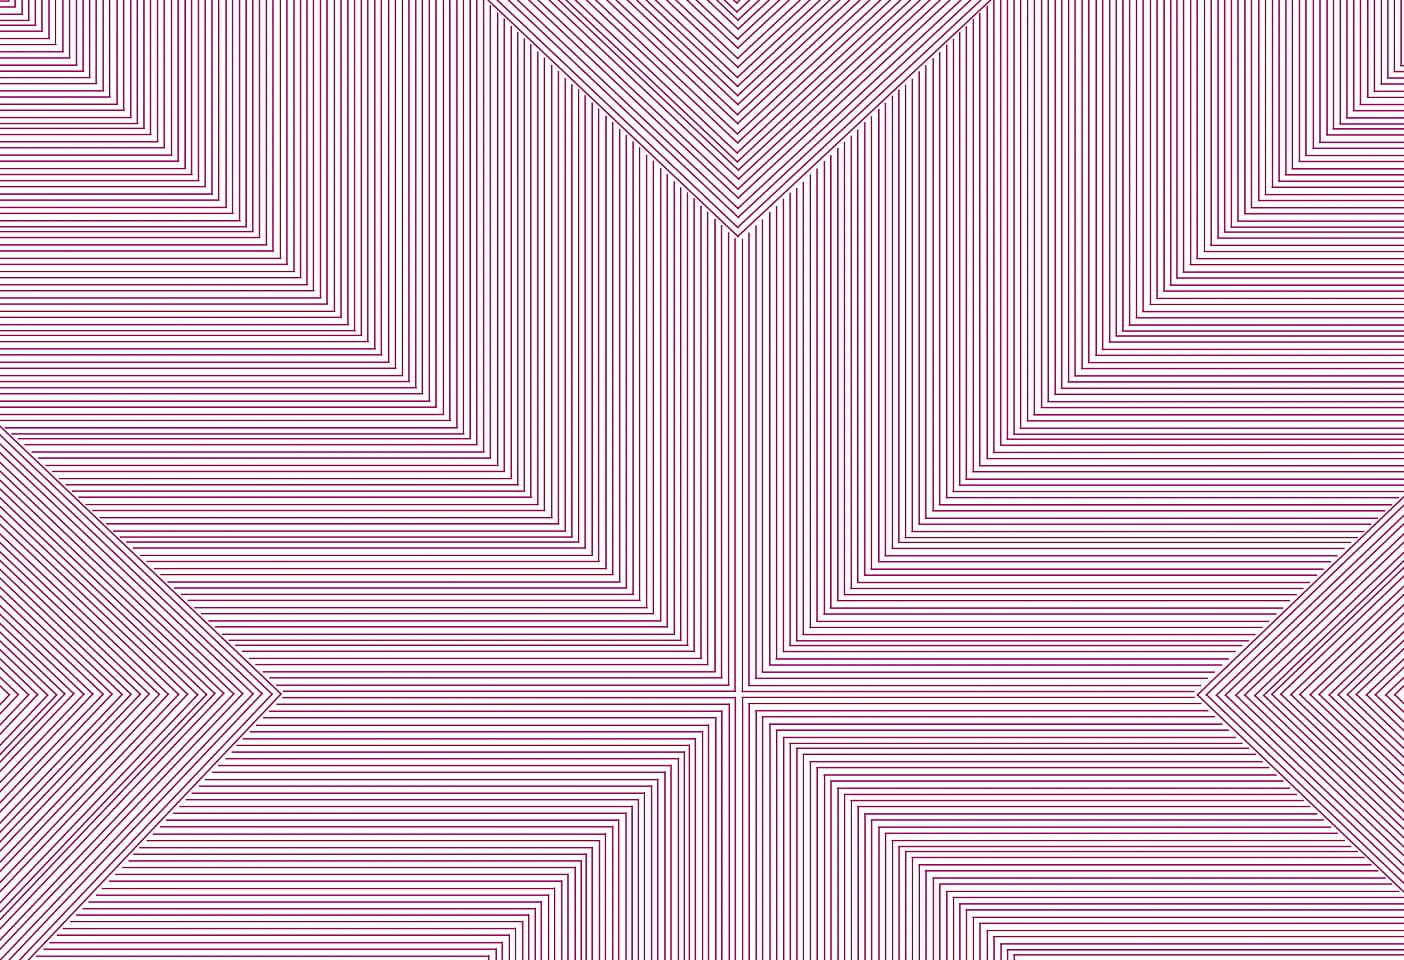 Dane Albert, Color Sticks #37 (mono), 2023
Acrylic on canvas (Concept), 48 x 72 in. (121.9 x 182.9 cm)
Series of colored lines and shapes in multiple configurations
DA.2023.sticks-037-mono